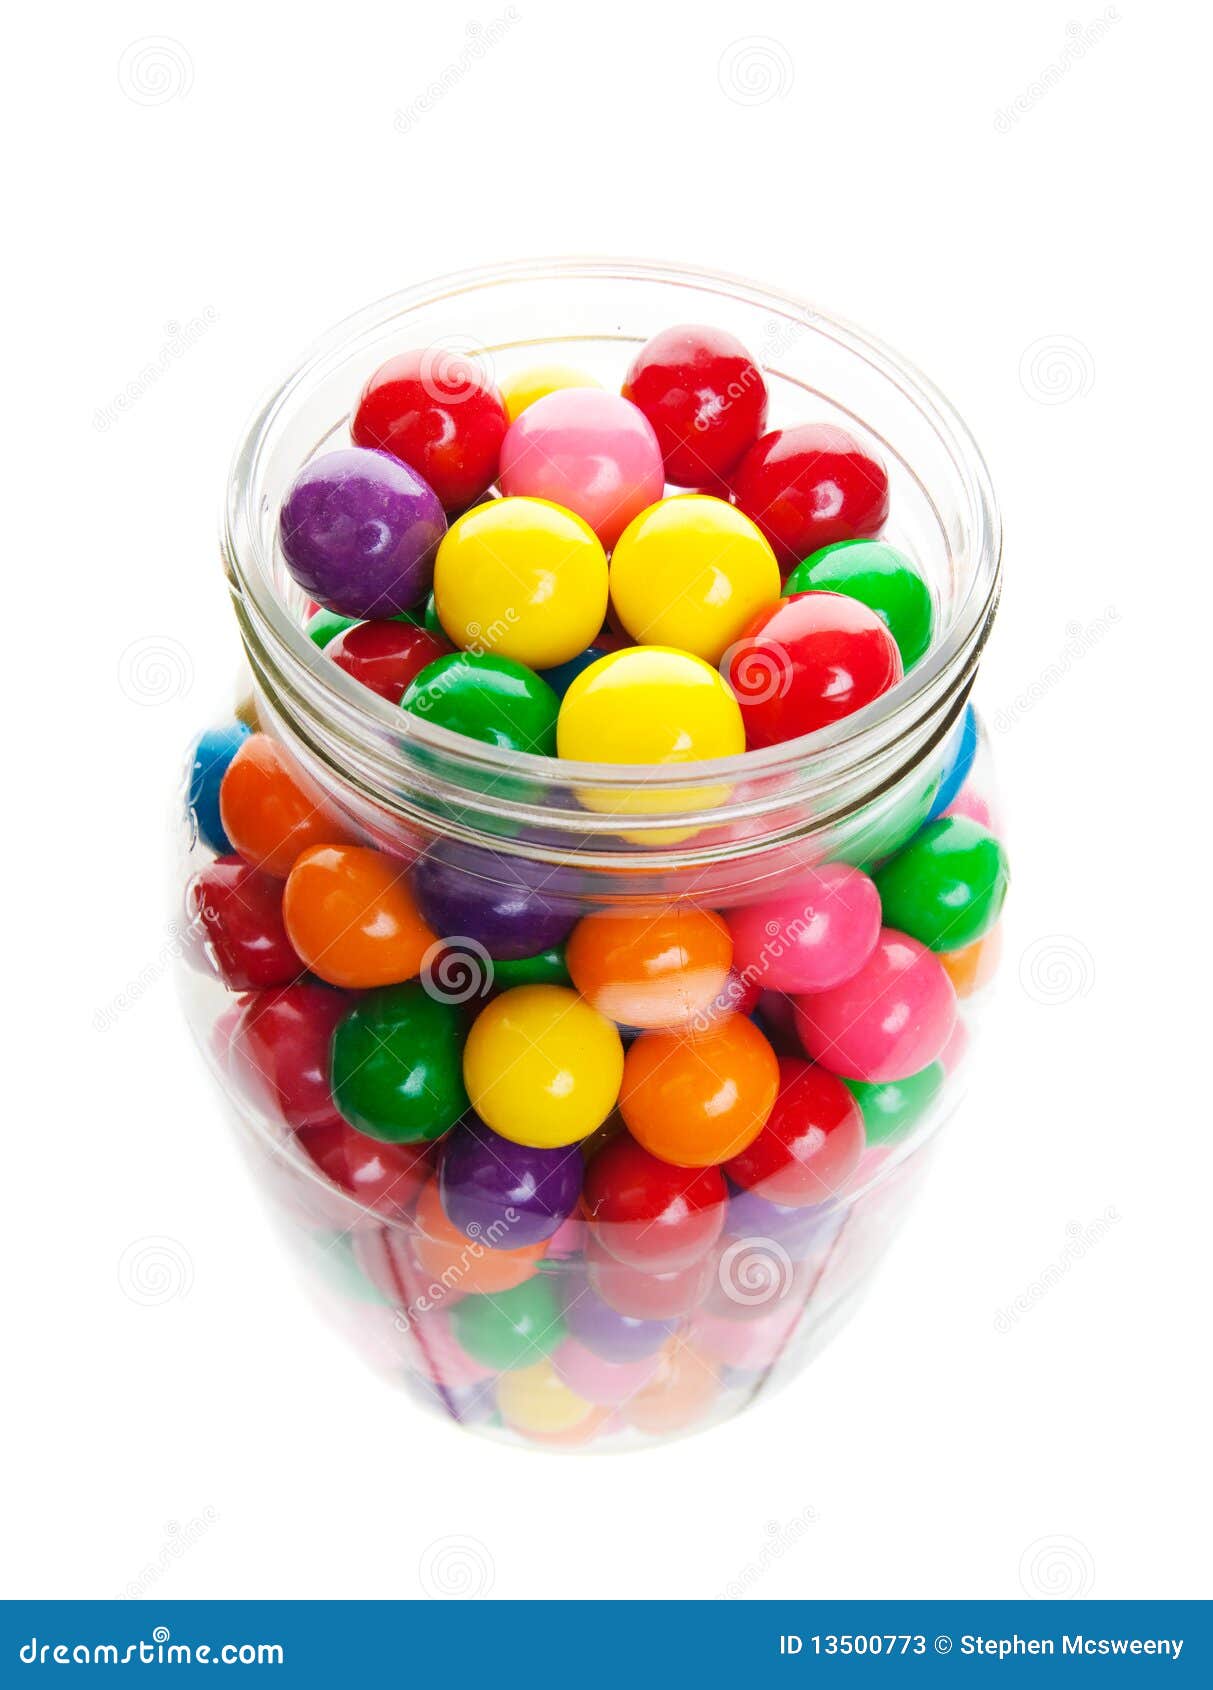 Gumball jar stock image. Image of treat, colorful, balls - 13500773